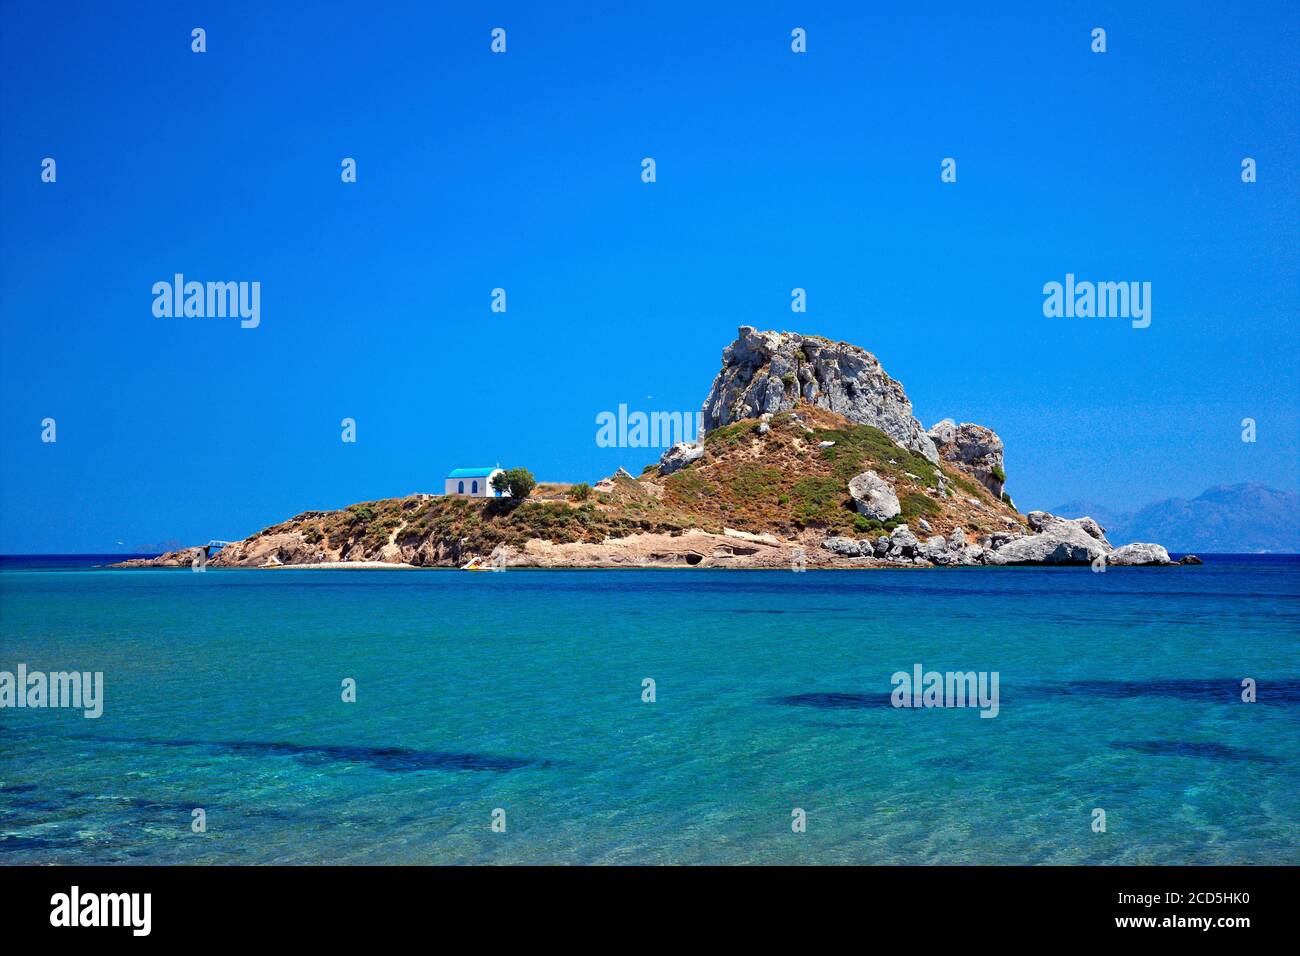 Kastri islet and the chapel of Agios Nikolaos, opposite to the early Christian Basilicas of Agios Stefanos, Kefalos bay, Kos island, Greece. Stock Photo